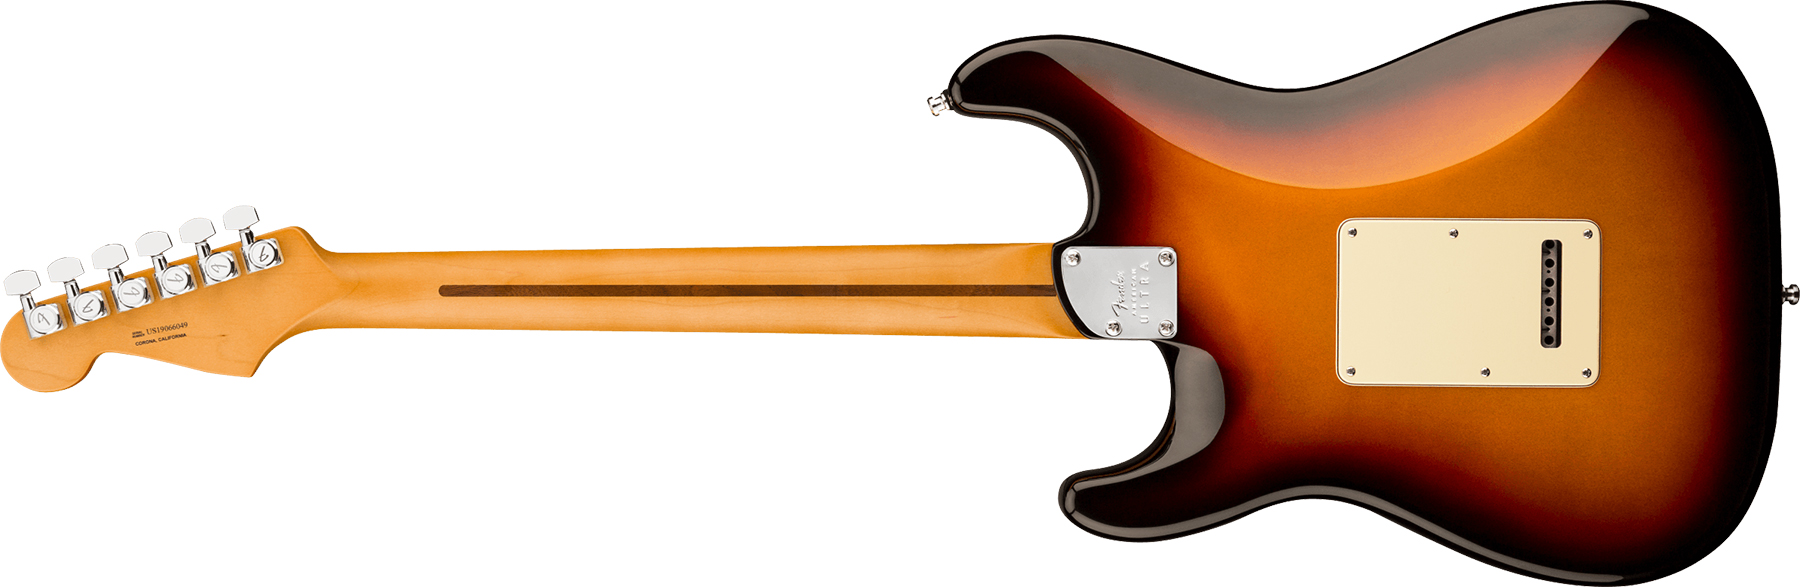 Fender Strat American Ultra Hss 2019 Usa Rw - Ultraburst - Guitare Électrique Forme Str - Variation 1